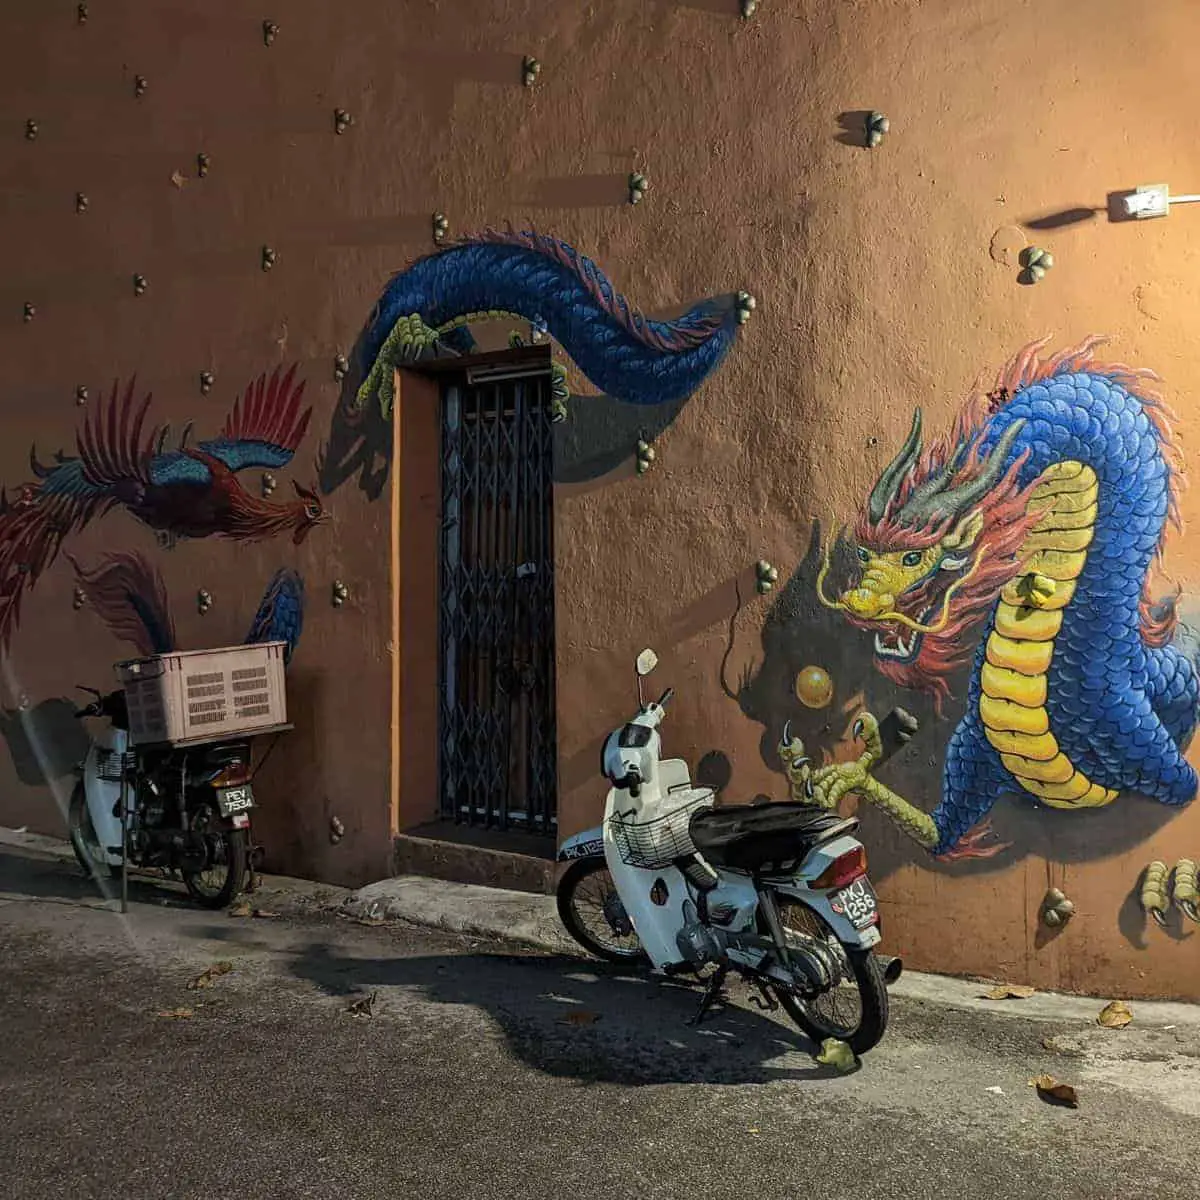 Carnarvon Street street art at night dragon and phoenix